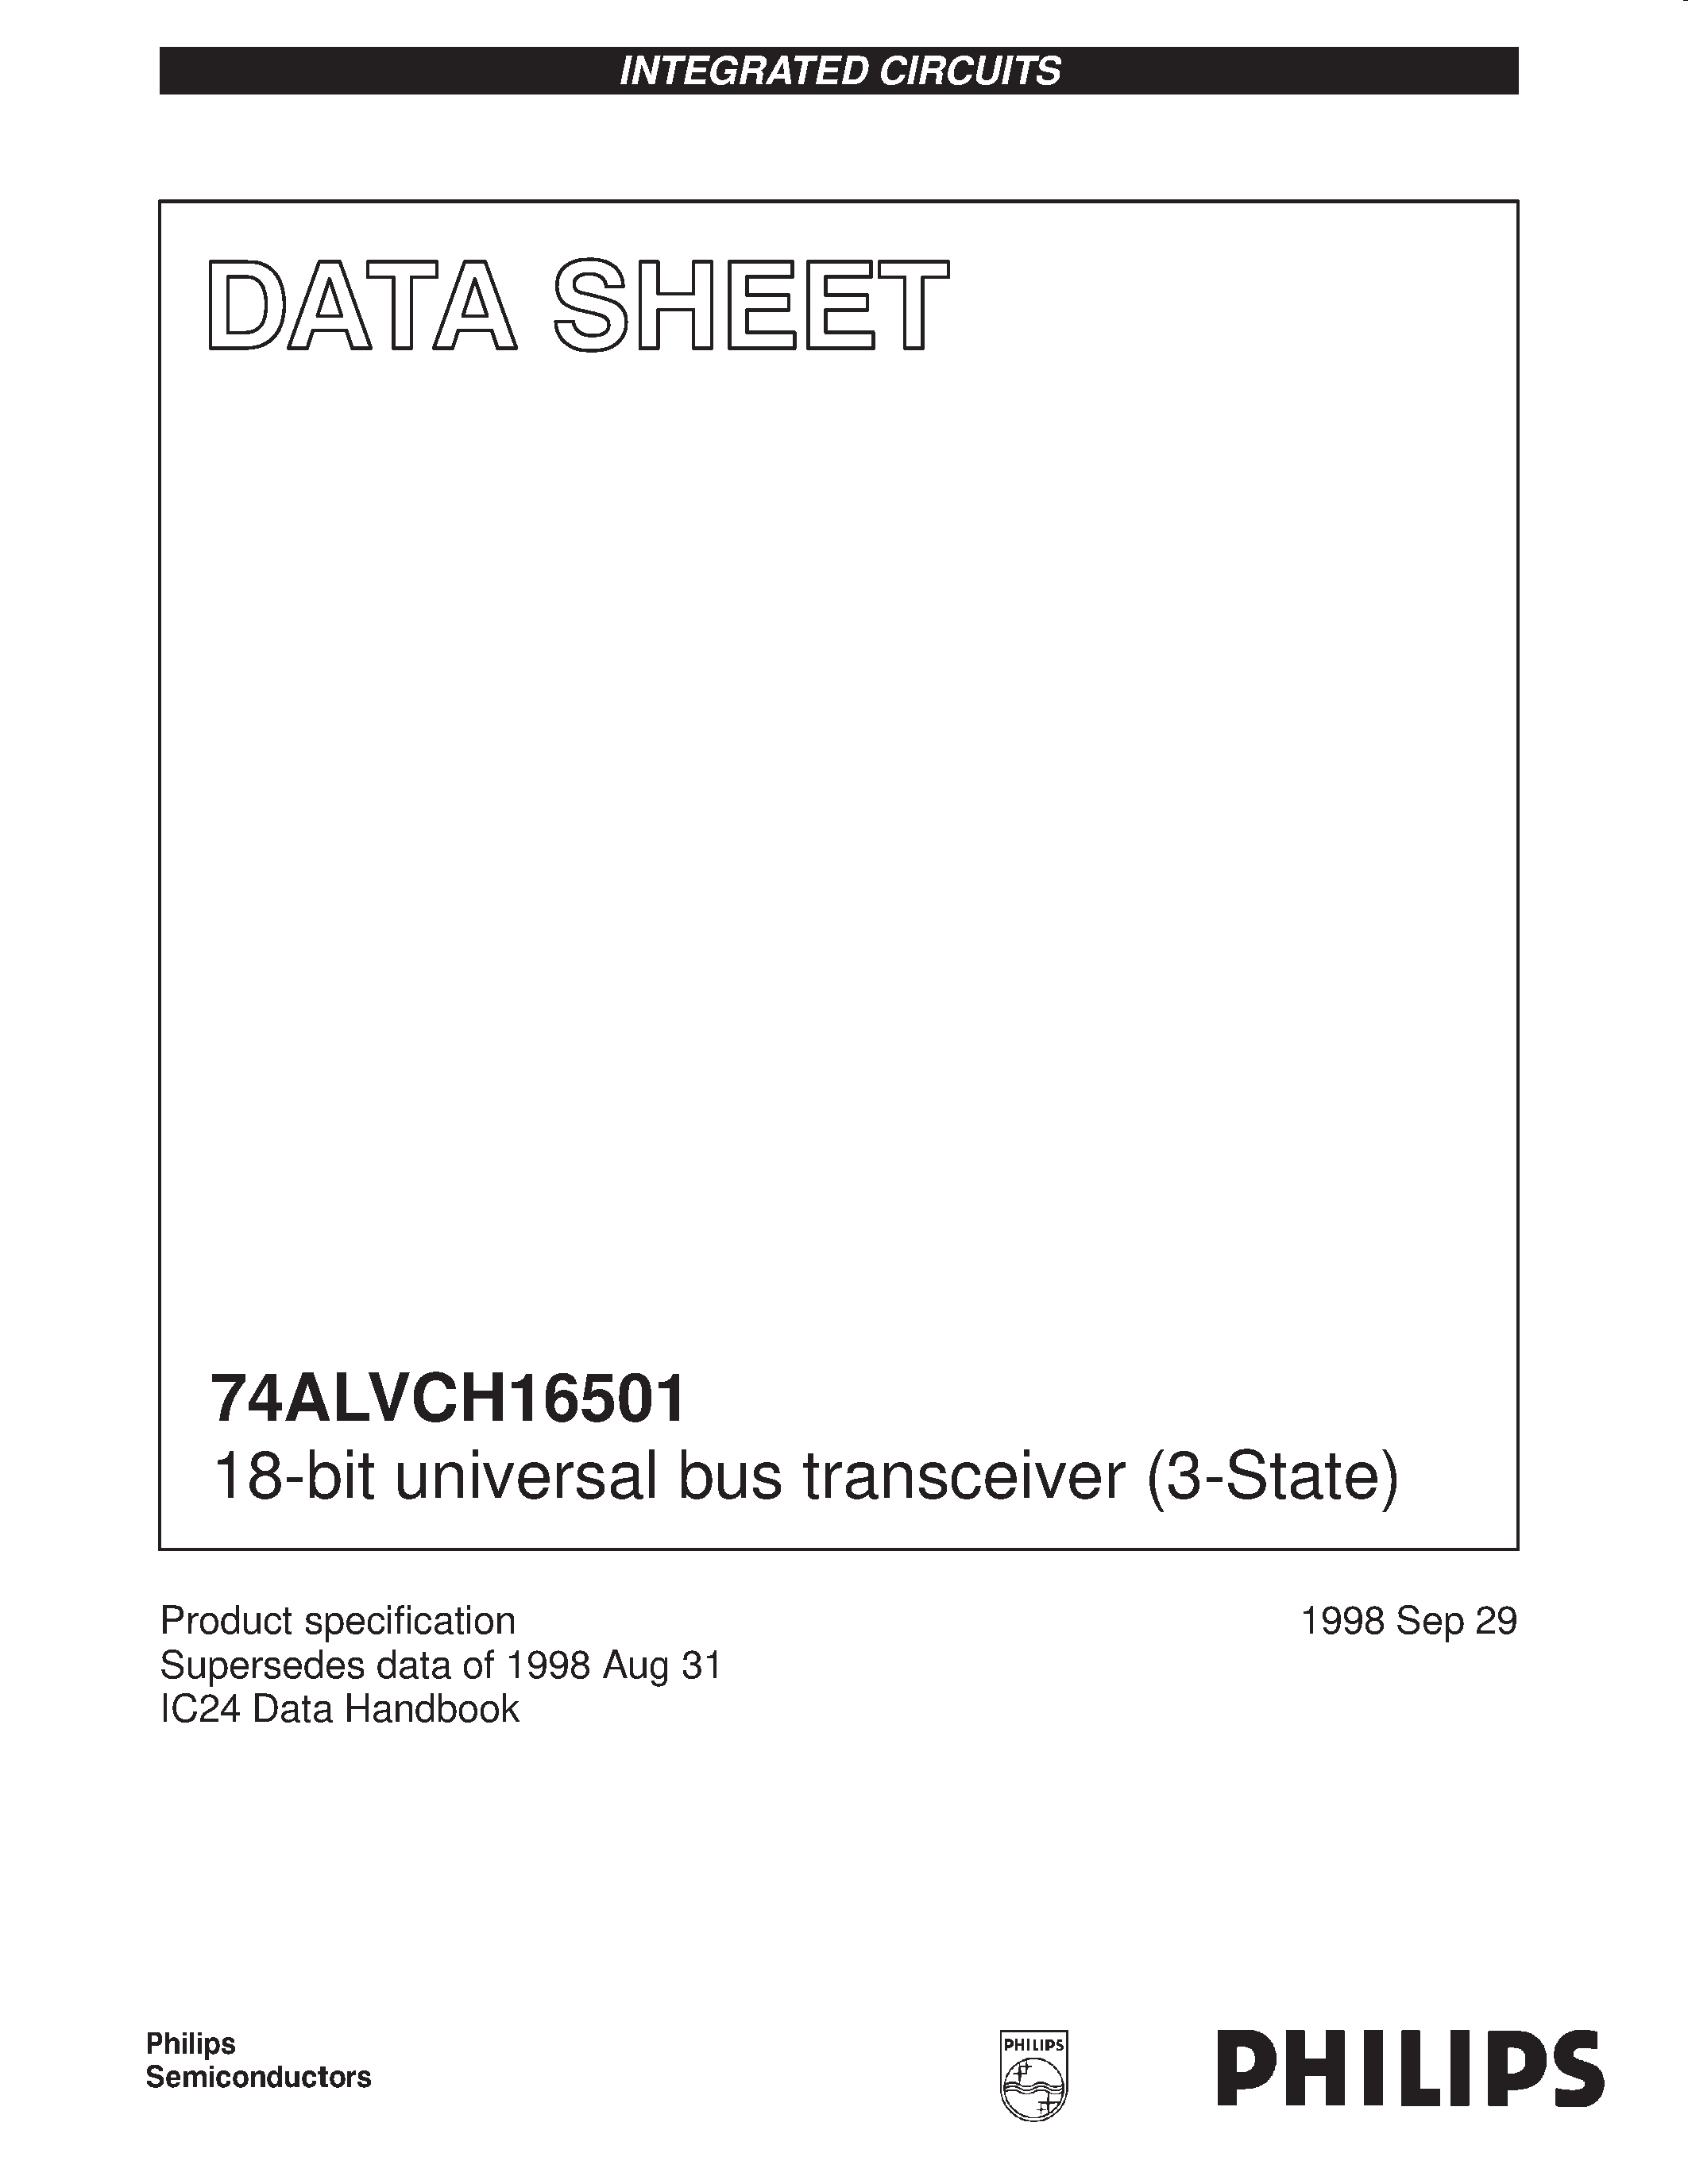 Даташит 74ALVCH16501DGG - 18-bit universal bus transceiver 3-State страница 1